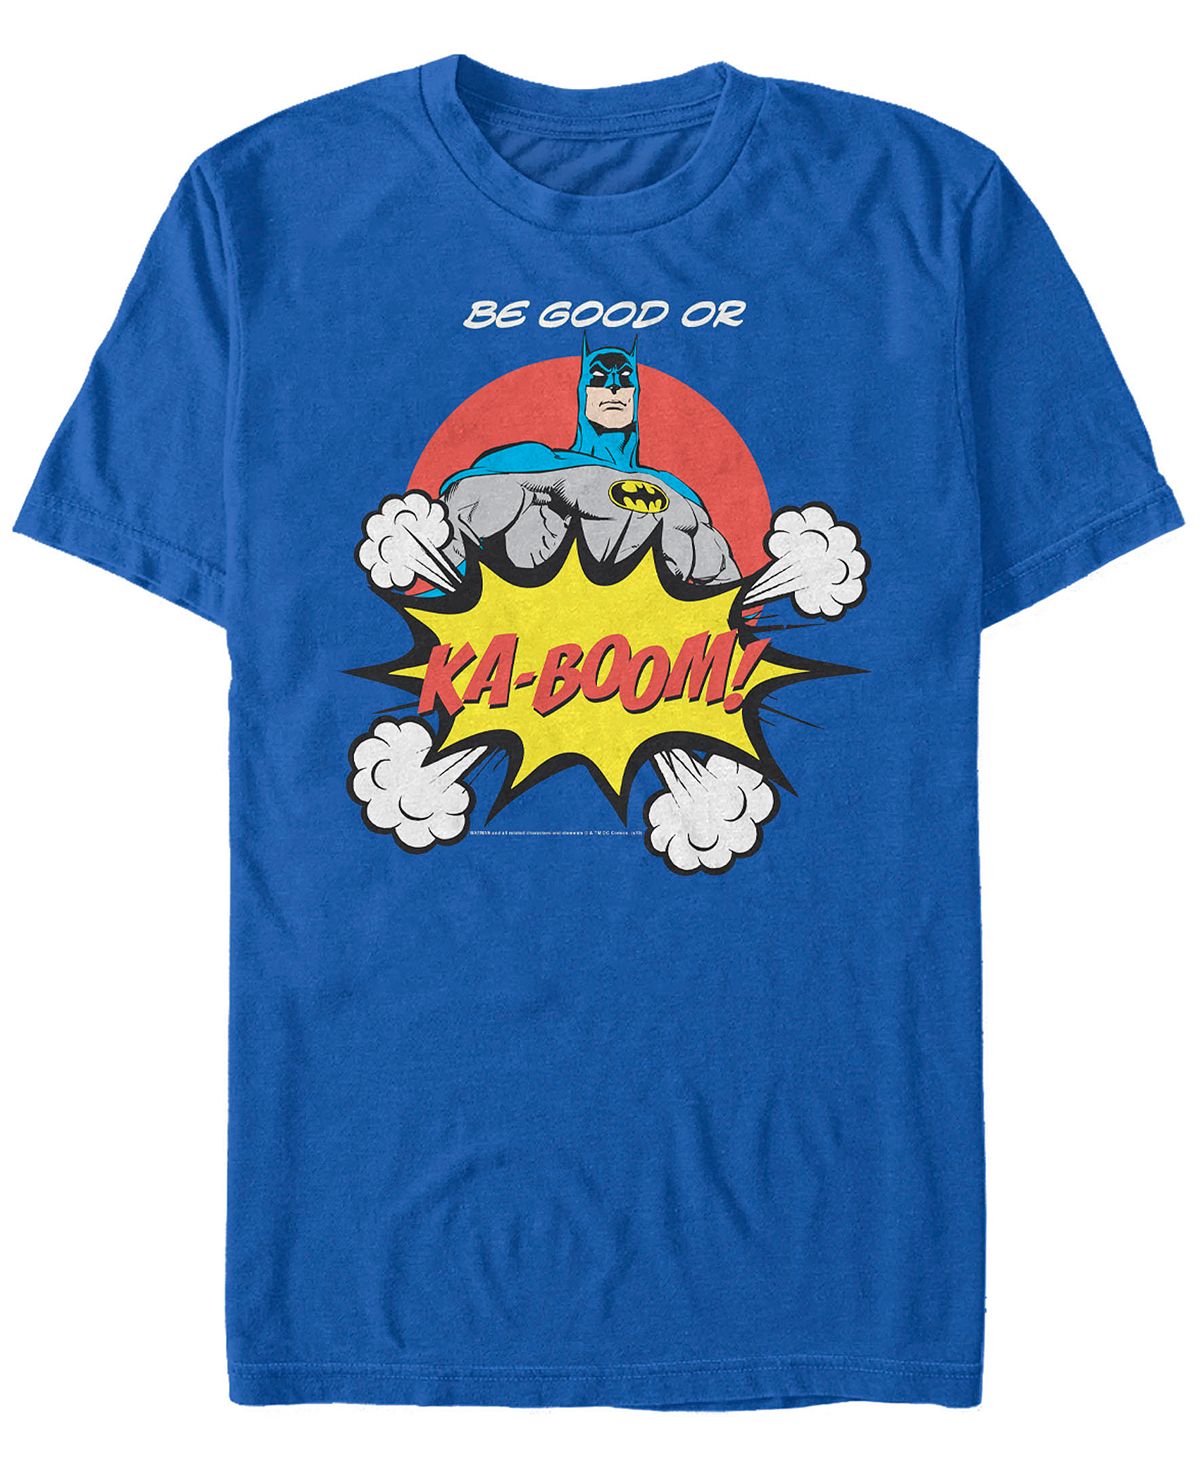 Мужская футболка с коротким рукавом dc batman be good или ka-boom comic text Fifth Sun, мульти